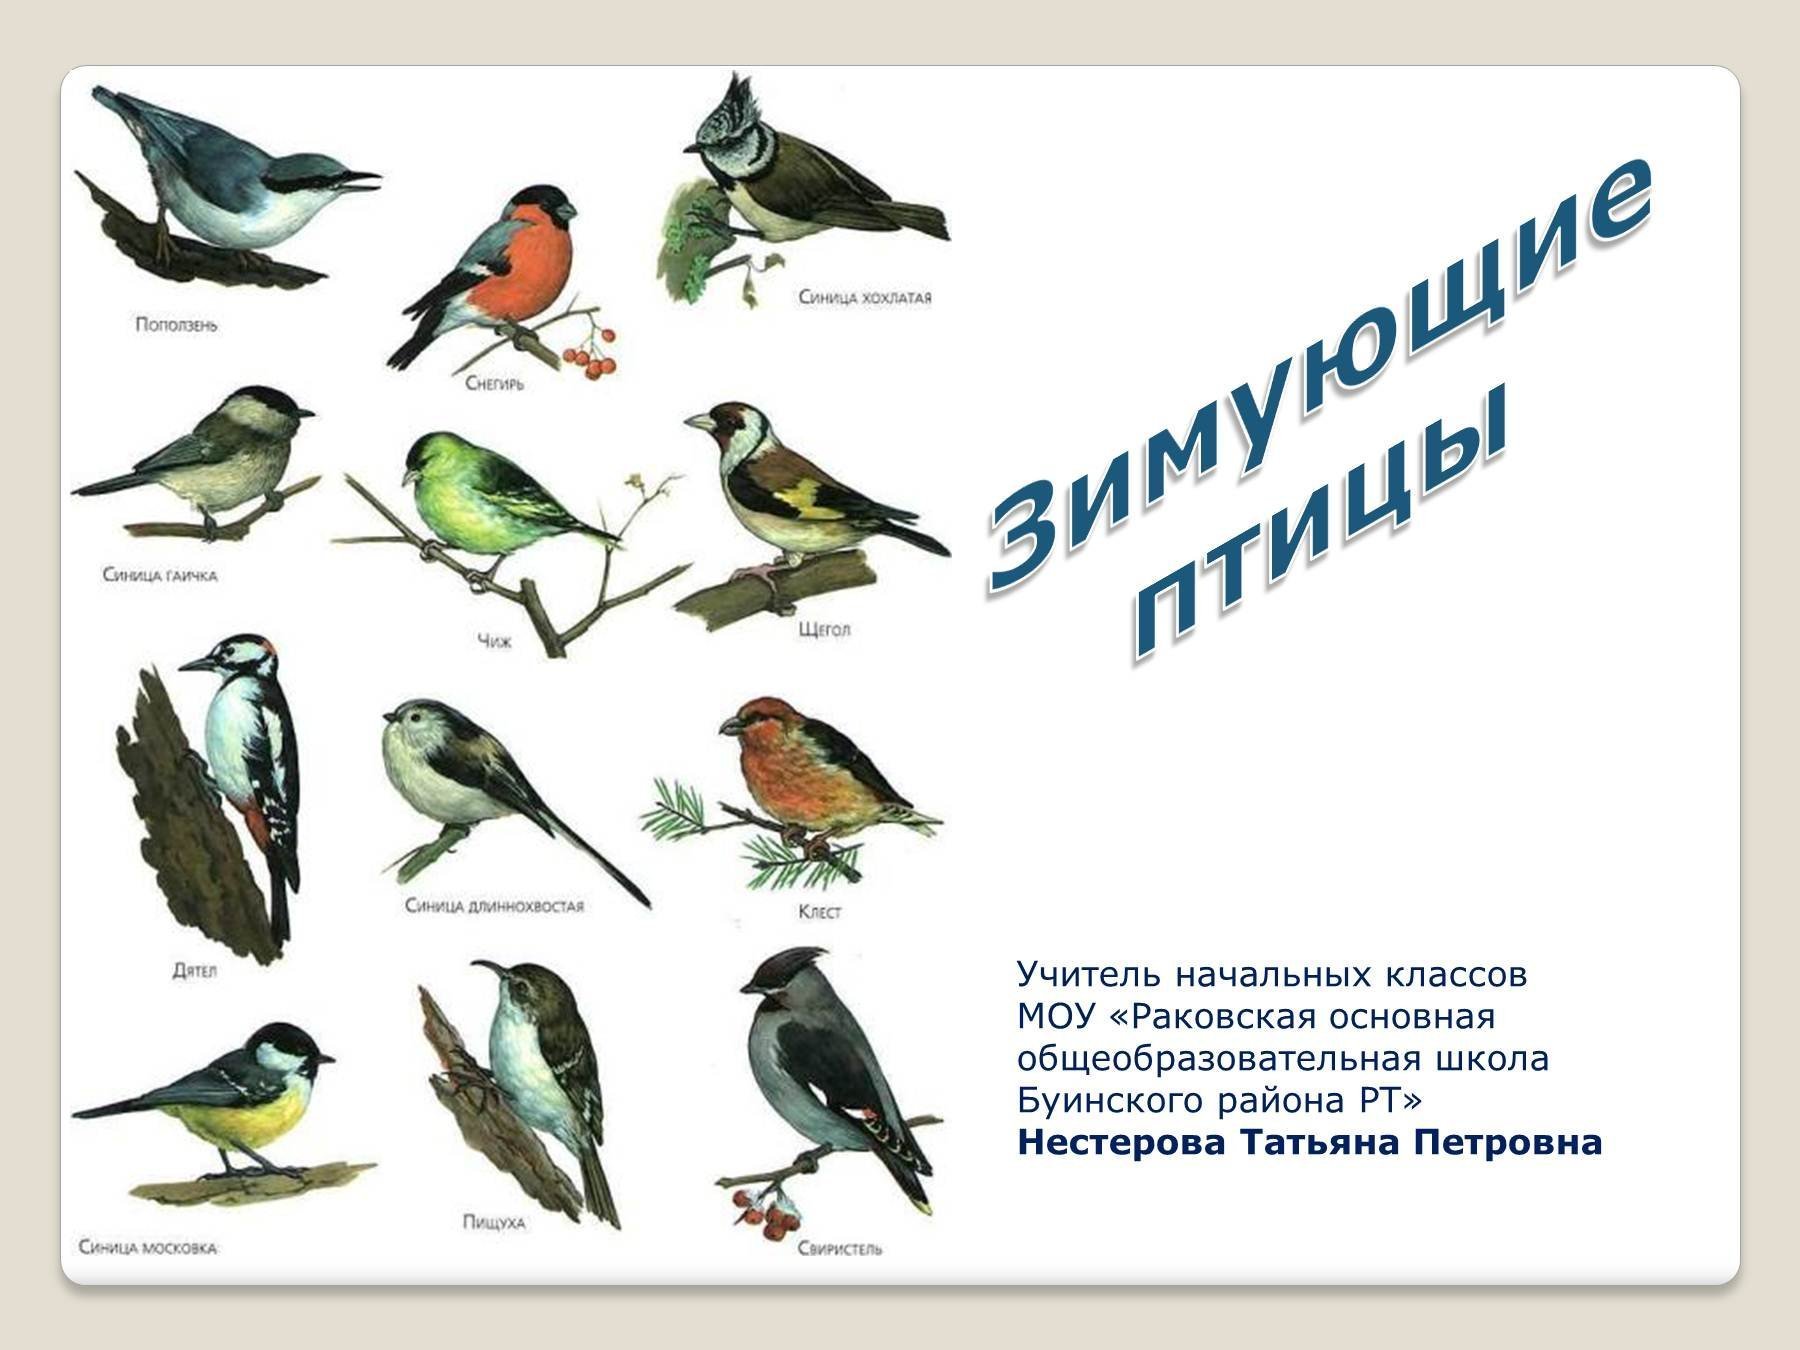 Birds of Russia and Crimea | Птицы России и Крыма's Journal